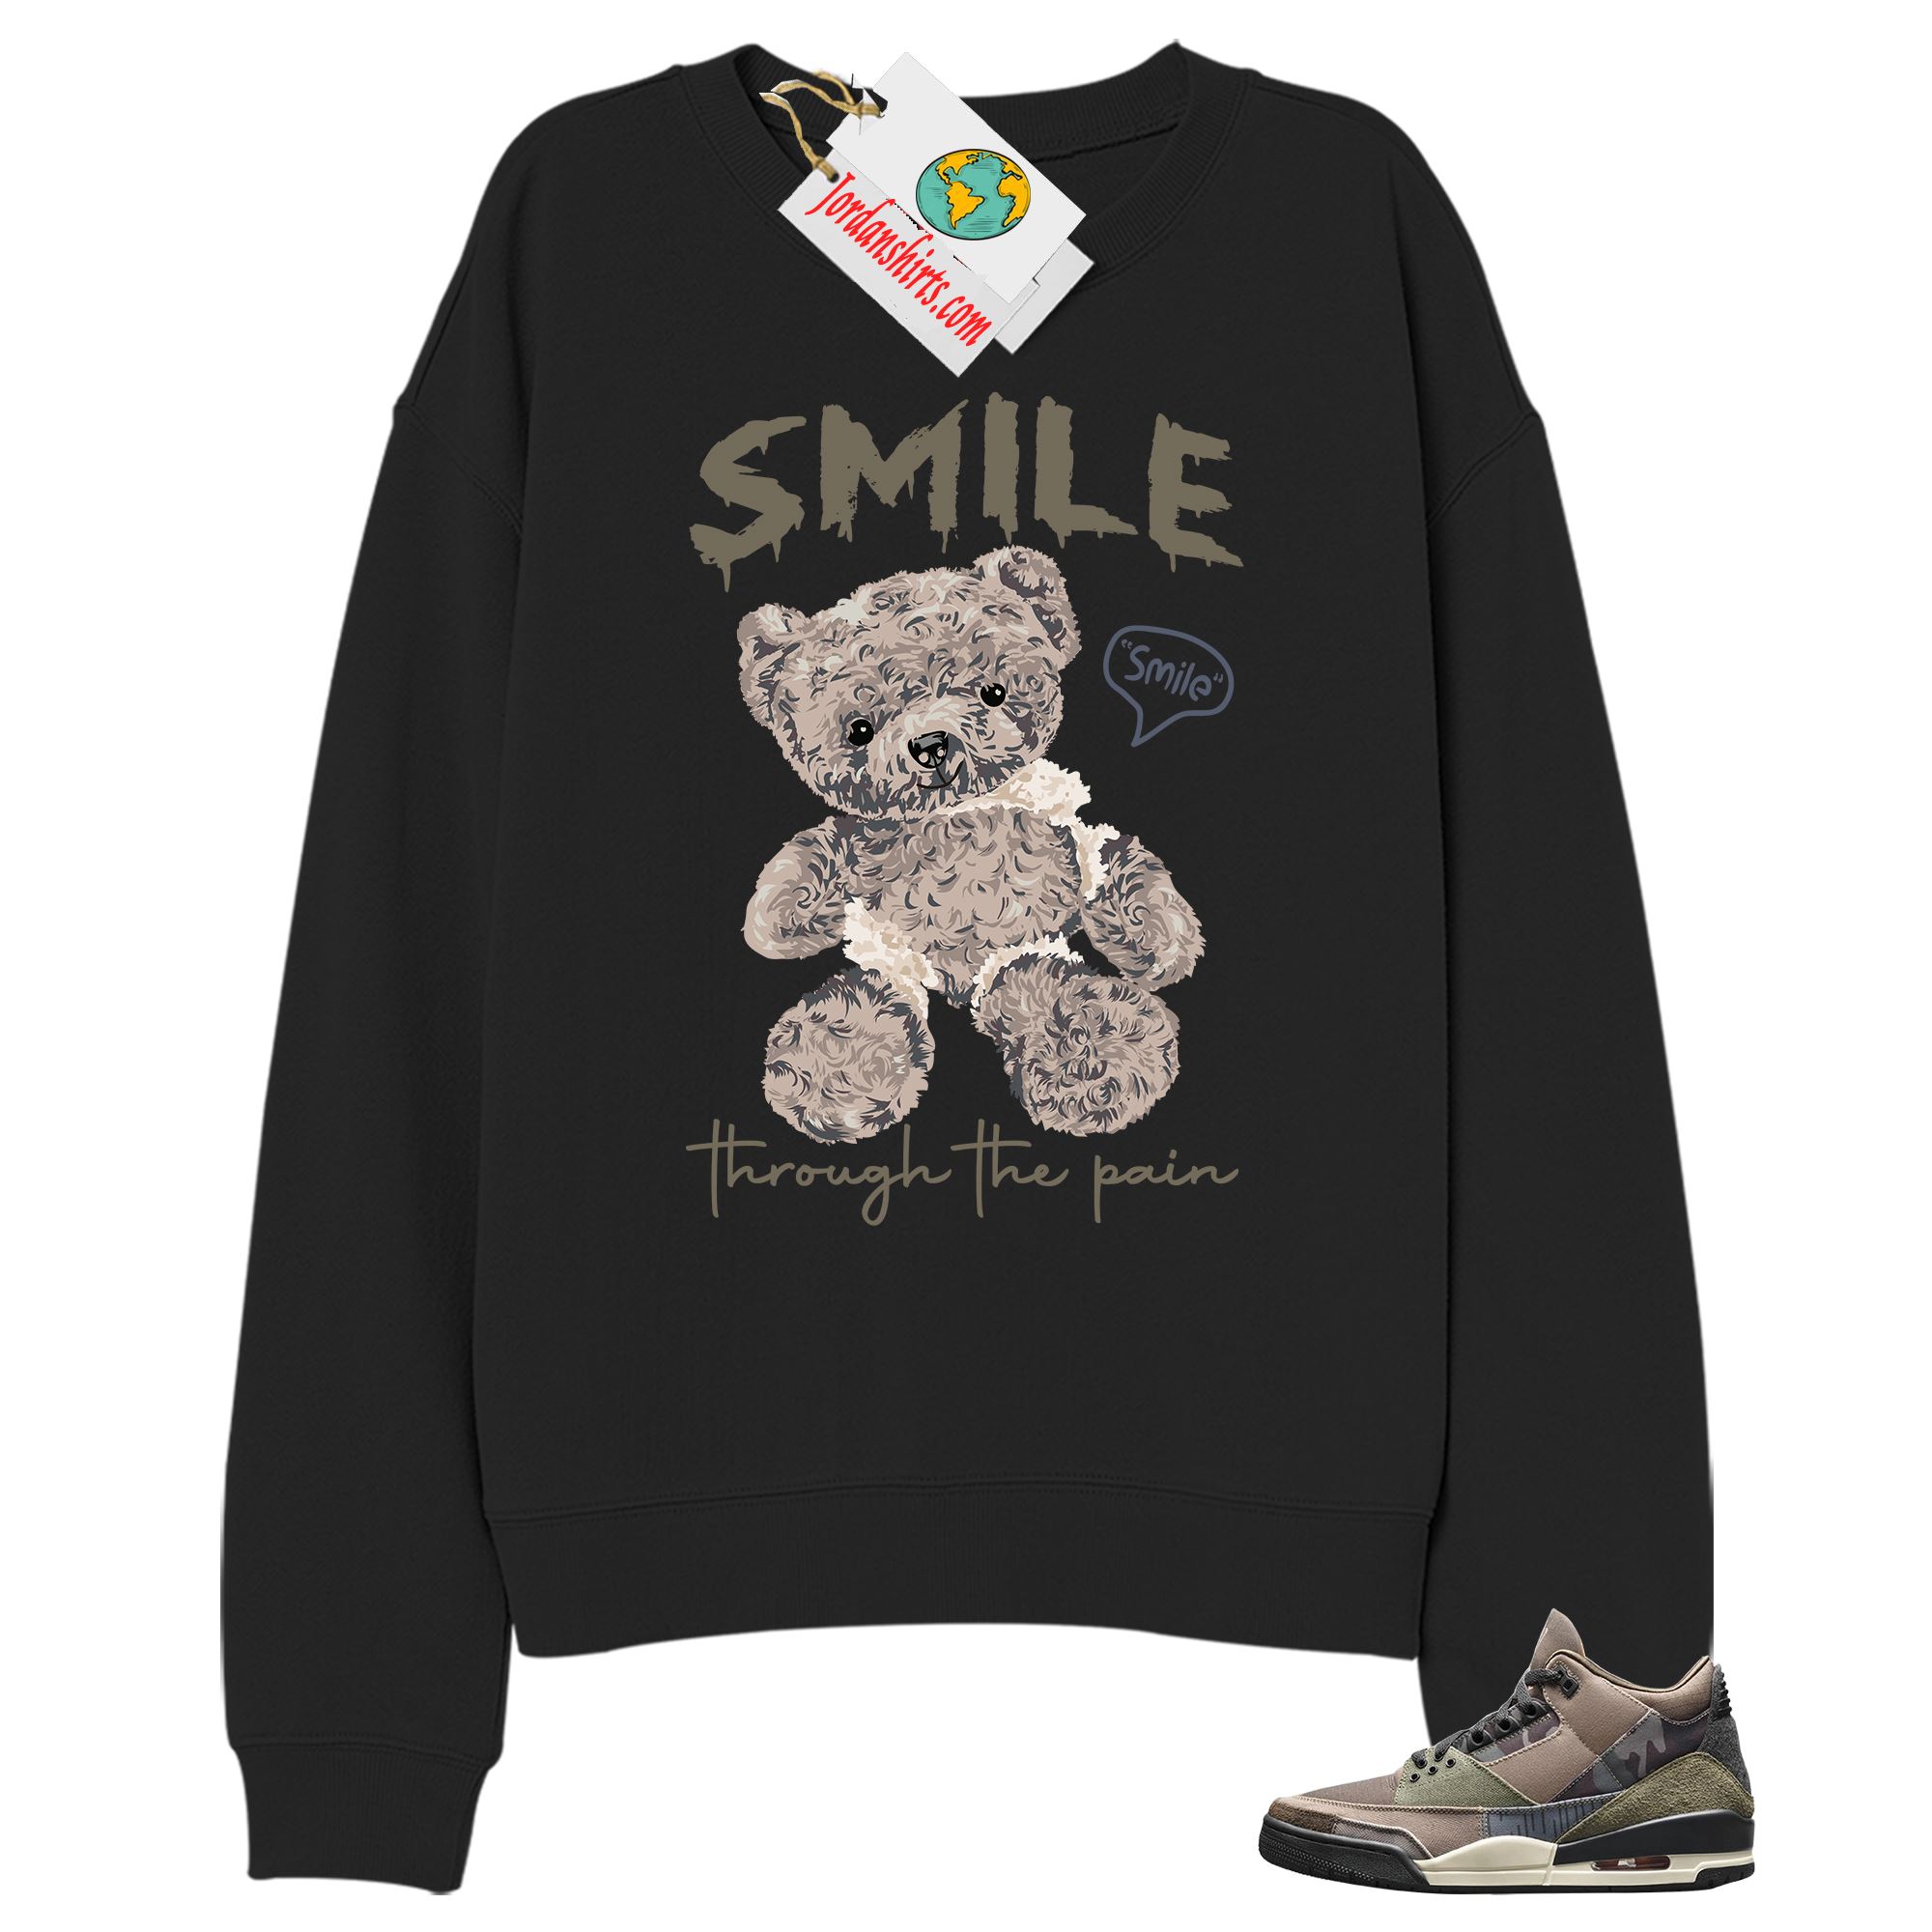 Jordan 3 Sweatshirt, Teddy Bear Smile Pain Black Sweatshirt Air Jordan 3 Camo 3s Plus Size Up To 5xl